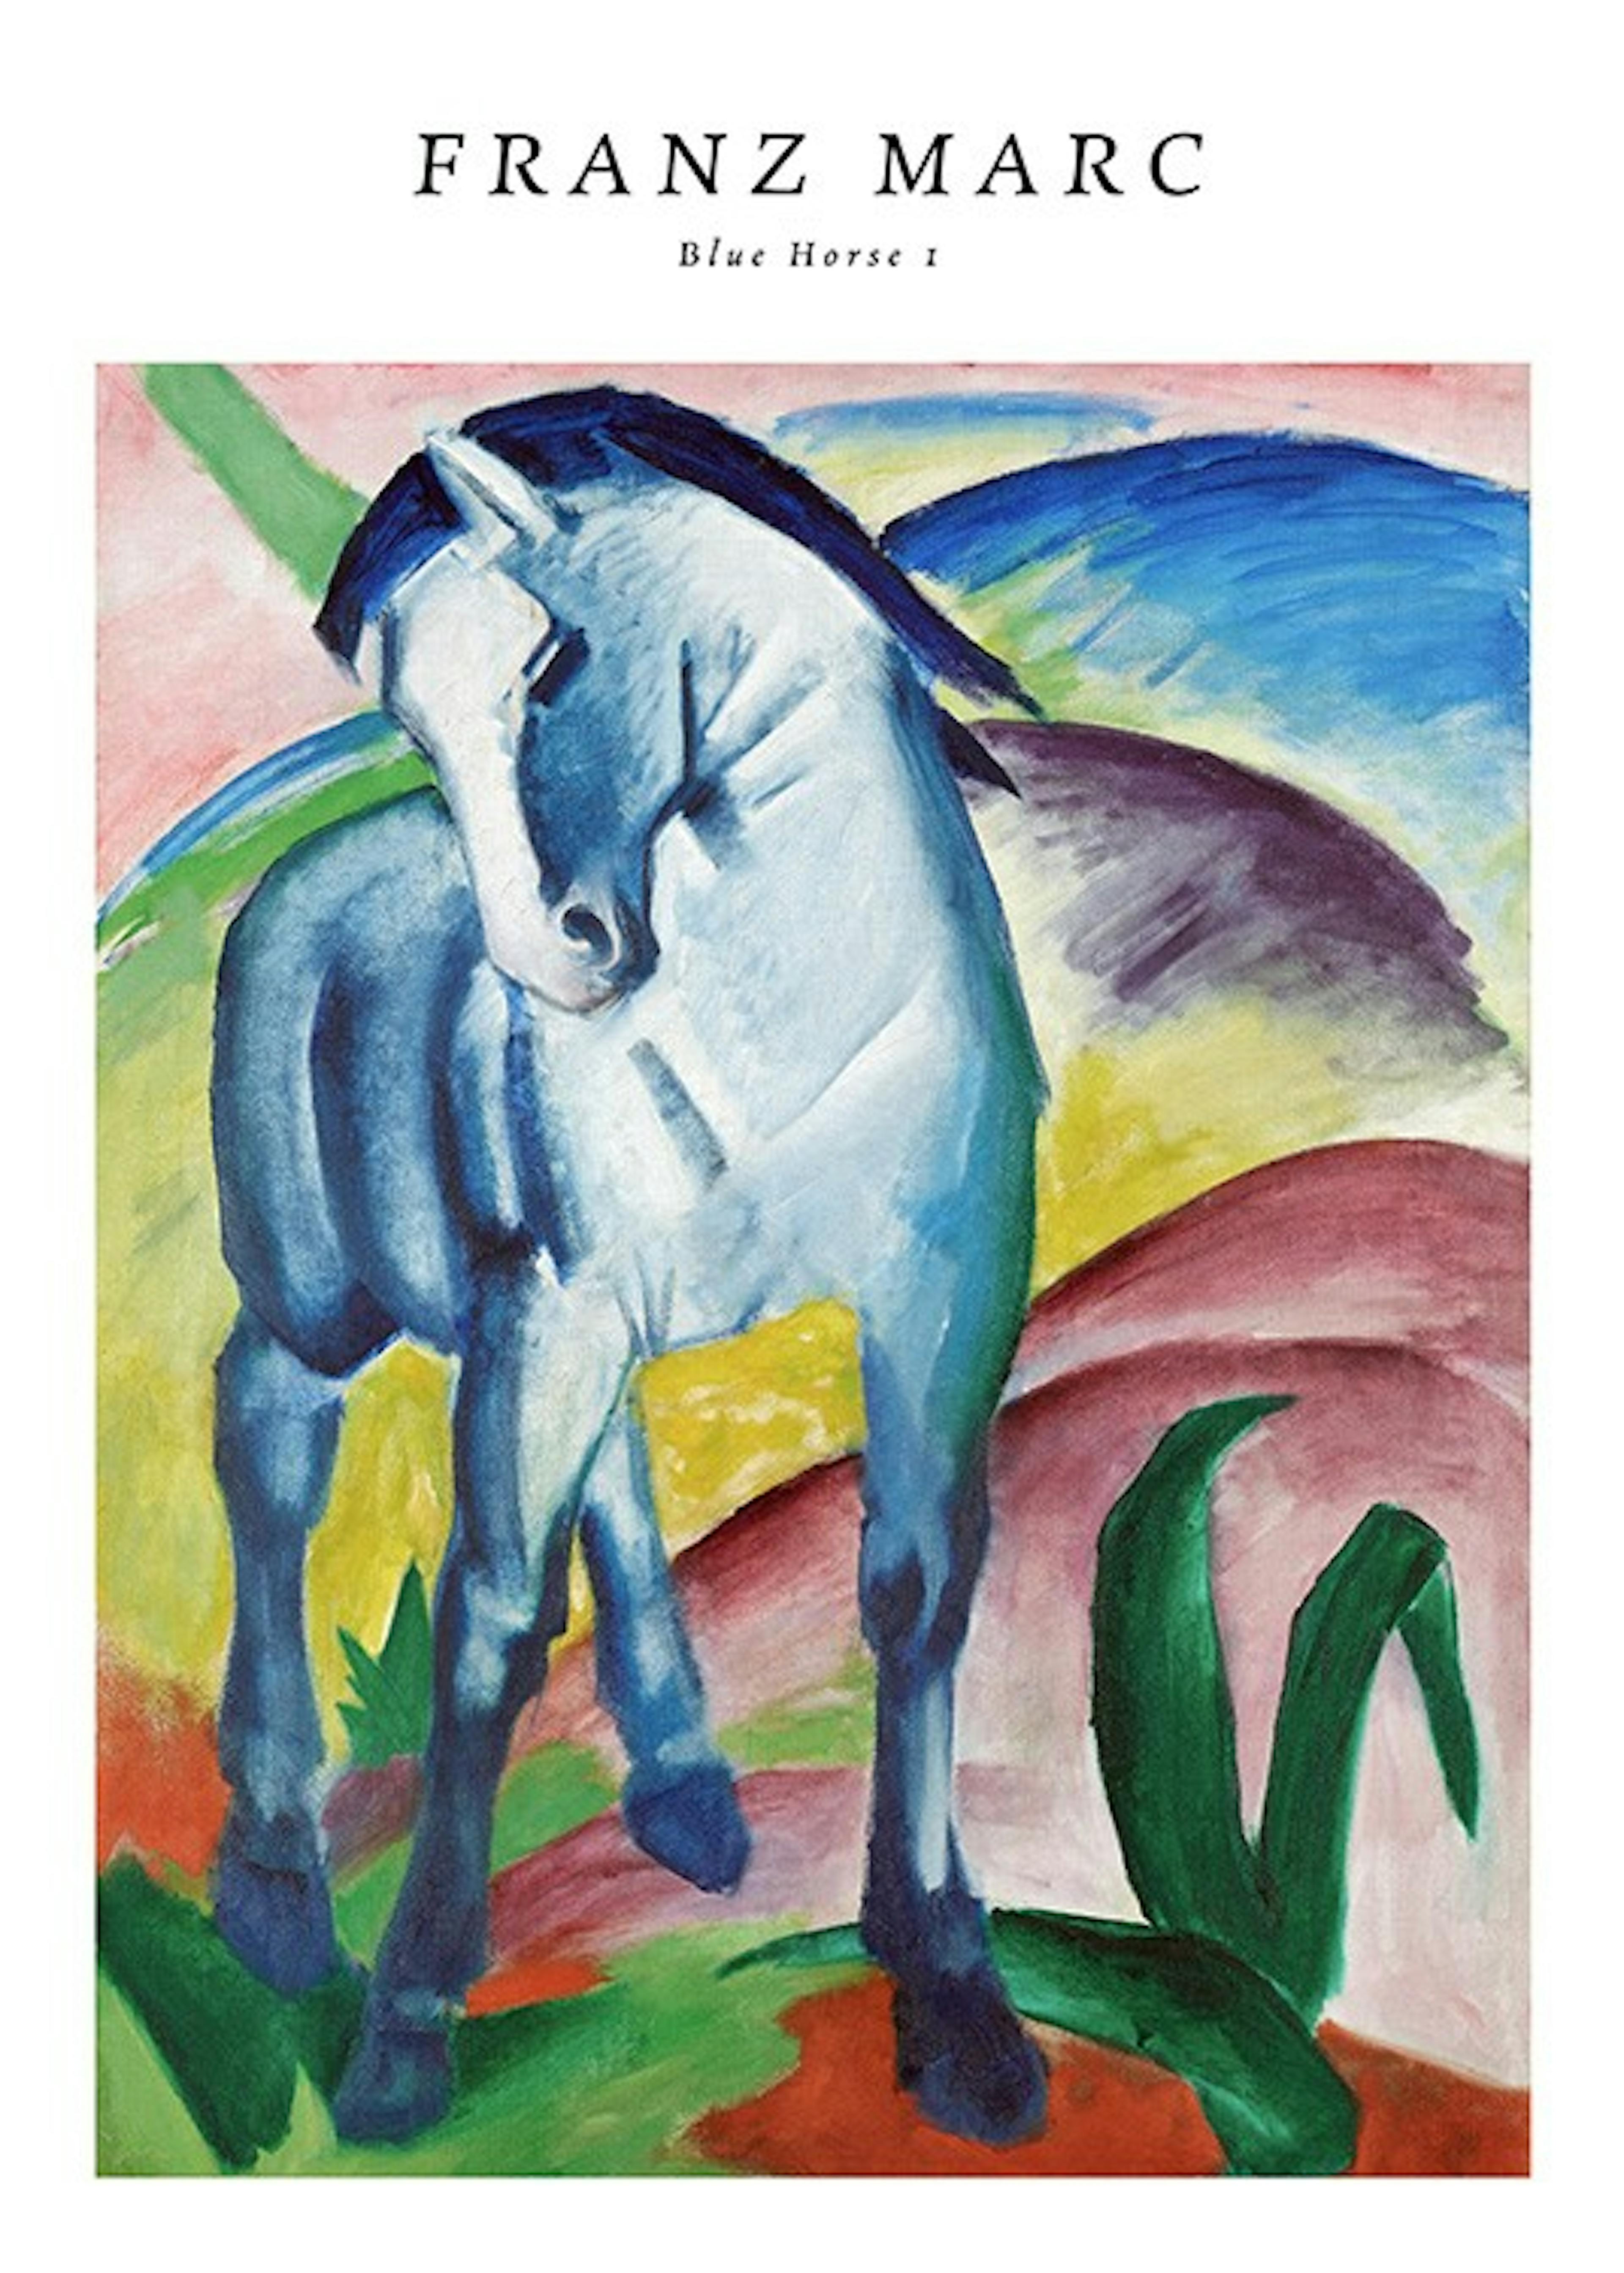 Franz Marc - Blue Horse 1 Print 0